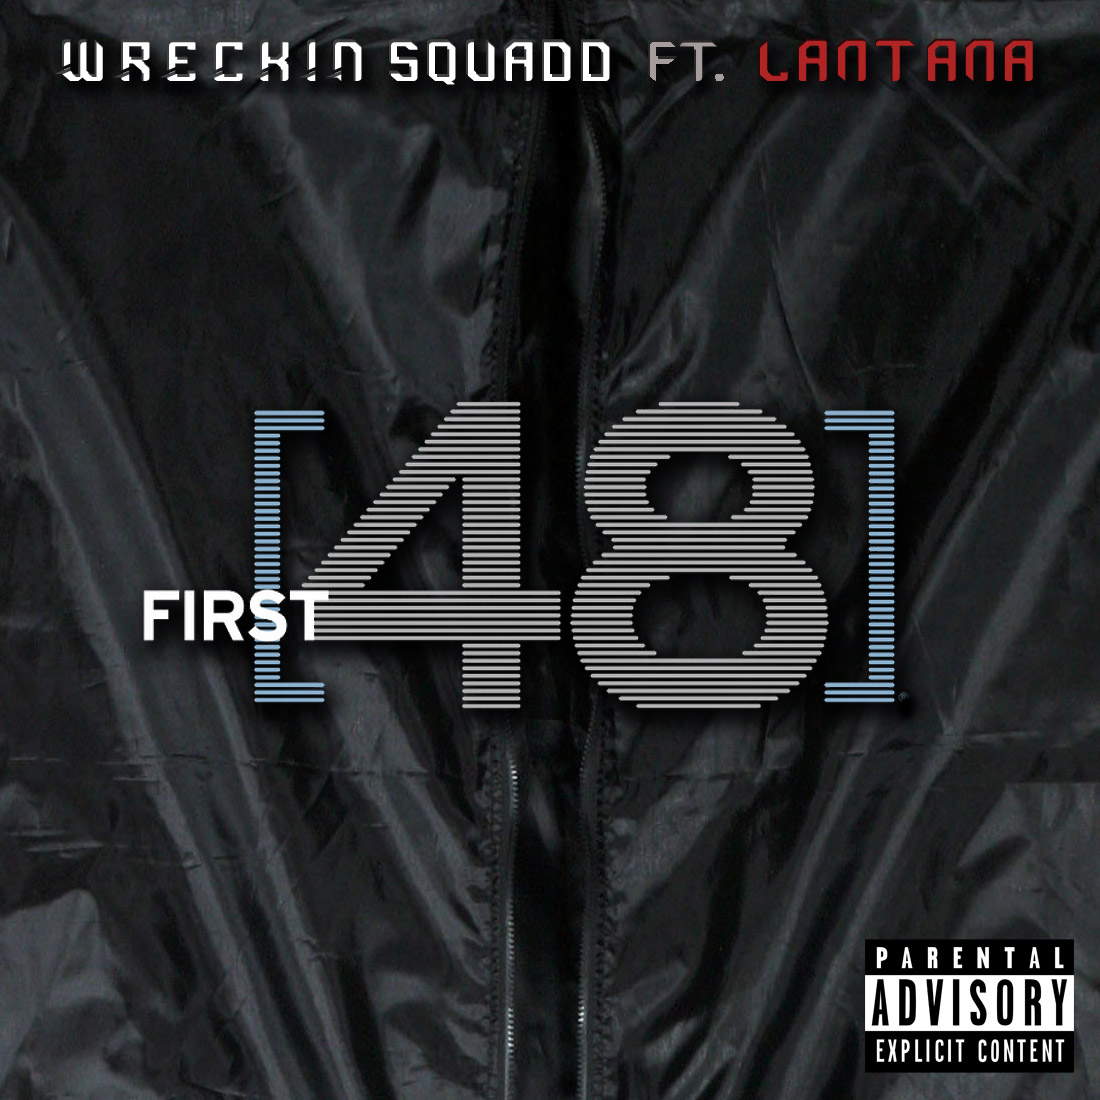 Wreckin Squadd Feat. Lantana – First 48